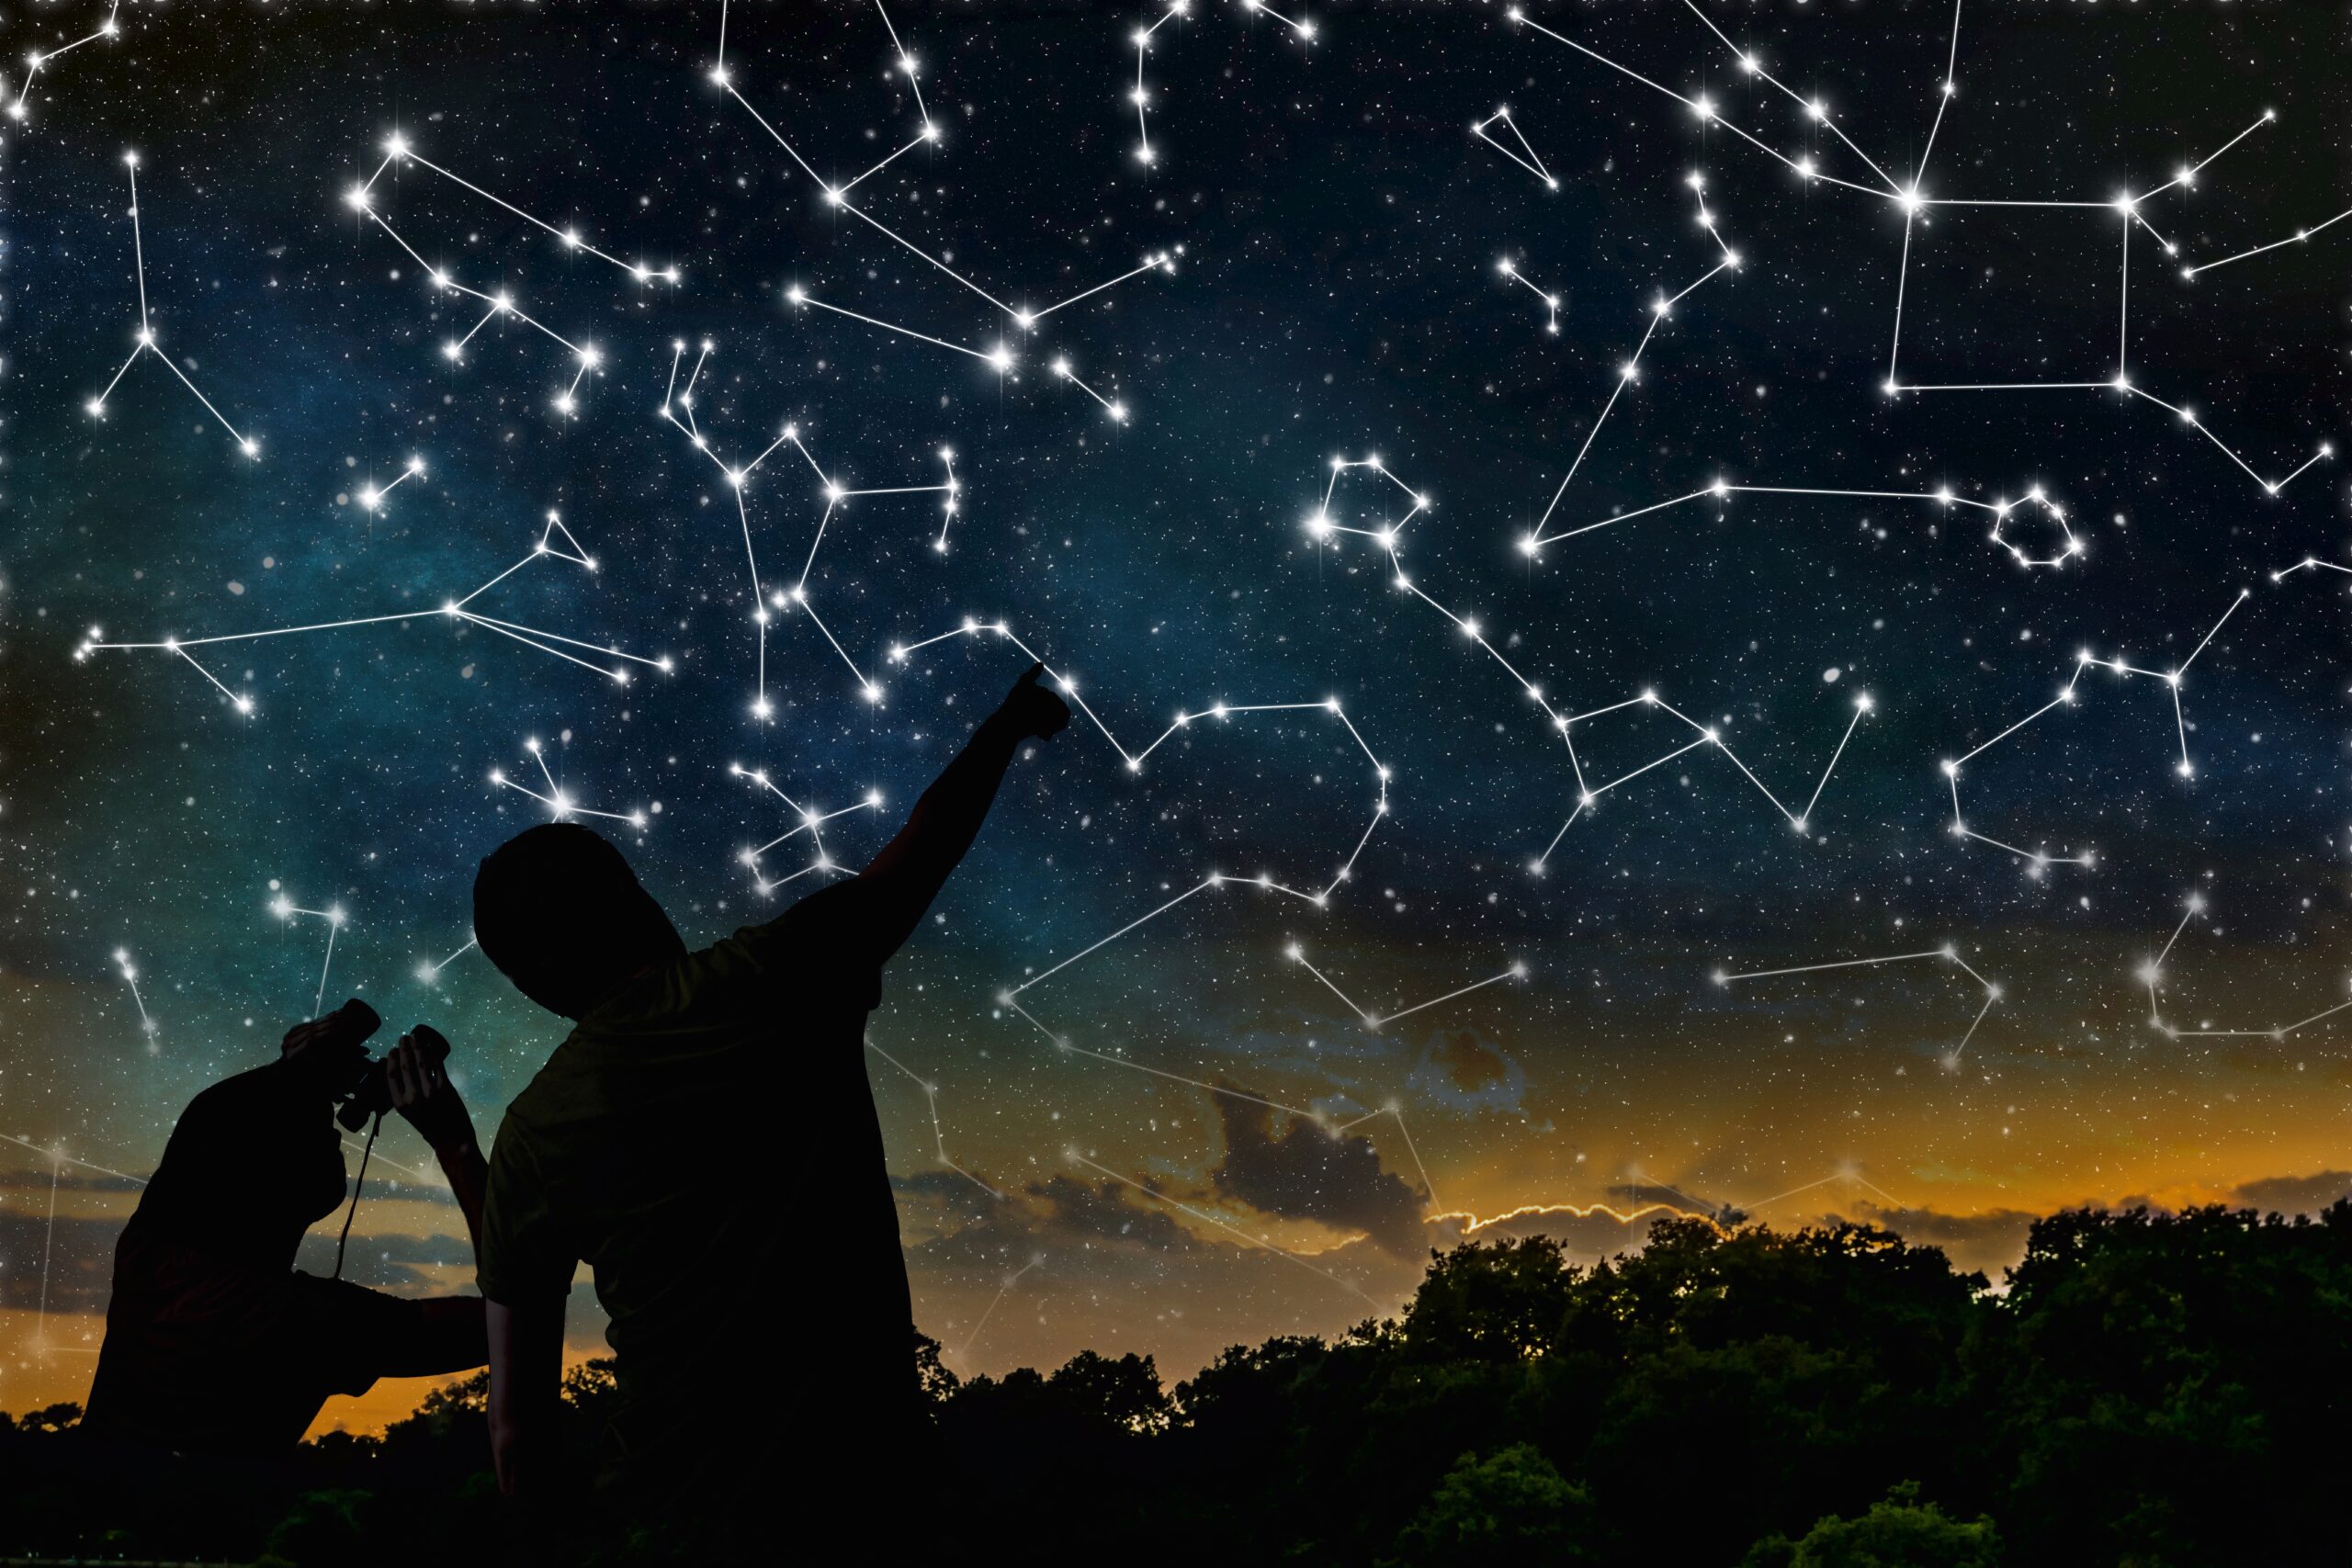 Звезды под музыку. Созвездие Орион. Звезда с неба. Человек на фоне звездного неба. Звездное небо созвездия.